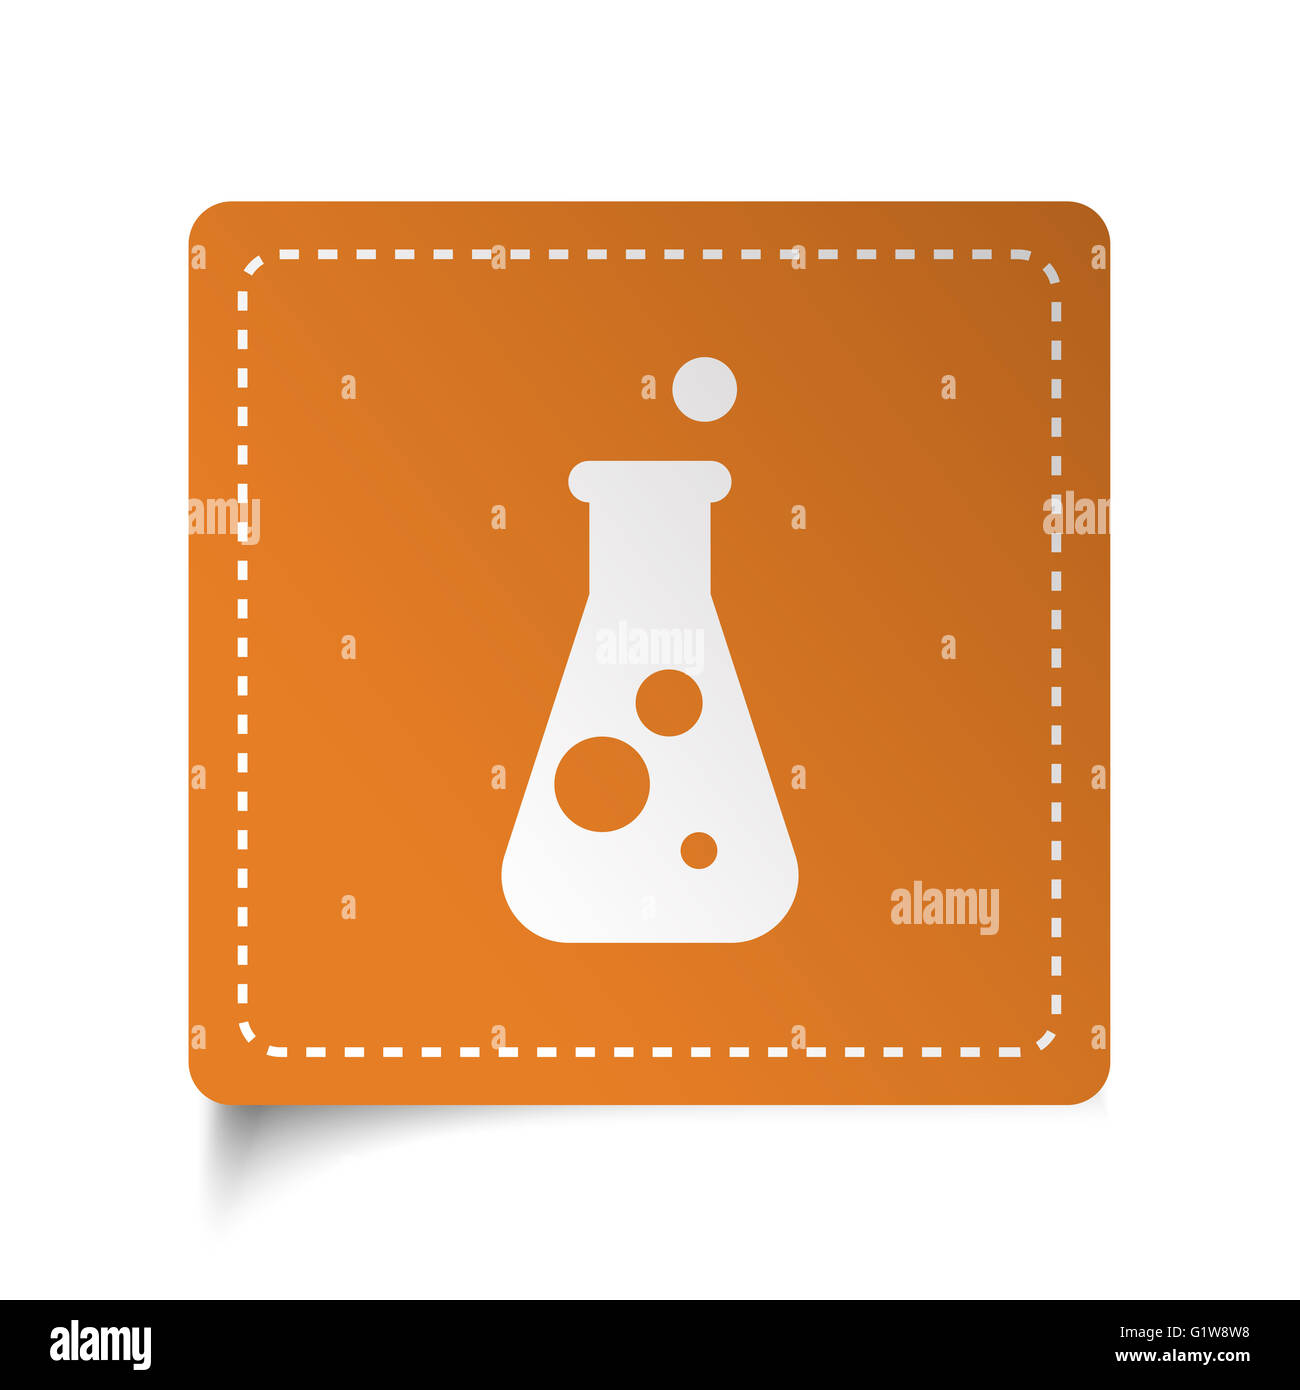 White flat Conical Flask icon on orange sticker Stock Photo